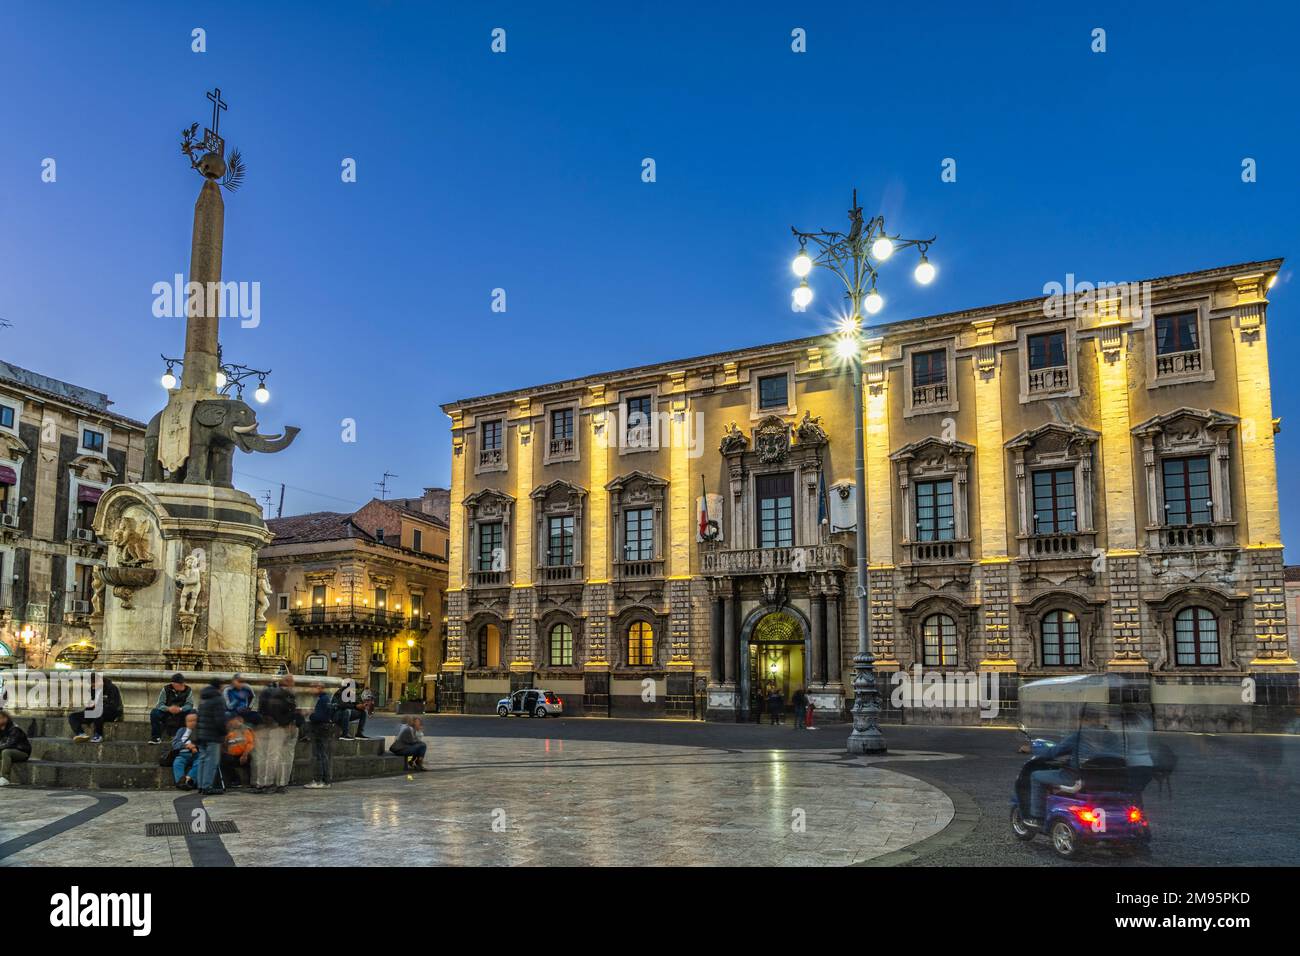 Piazza del Duomo mit Elefantenbrunnen und Palazzo degli Elefanti, jetzt das Rathaus der Stadt Catania. Catania, Sizilien, Italien, Europa Stockfoto